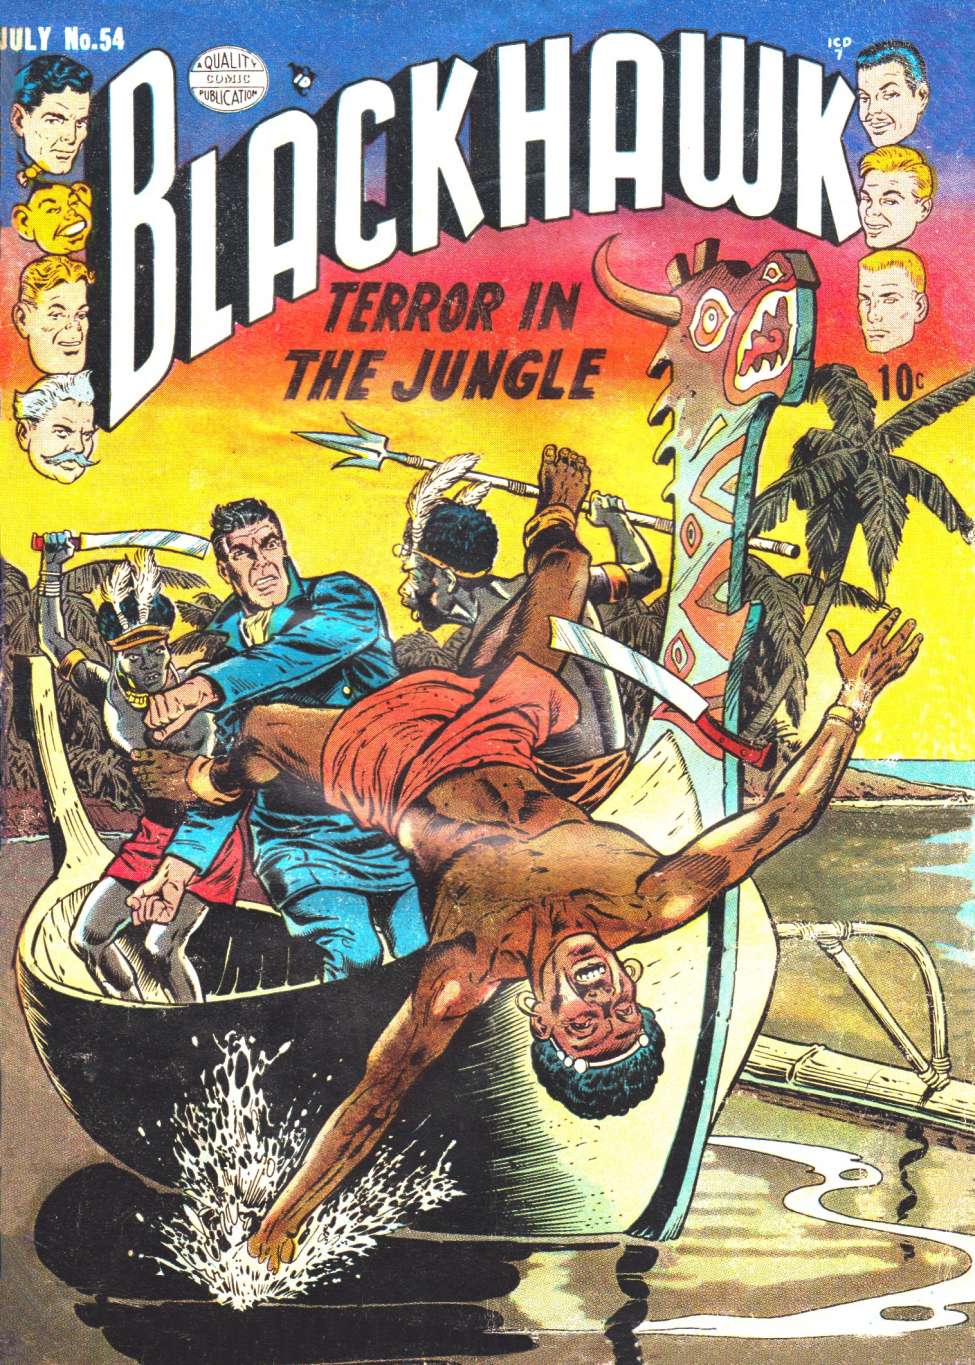 Book Cover For Blackhawk 54